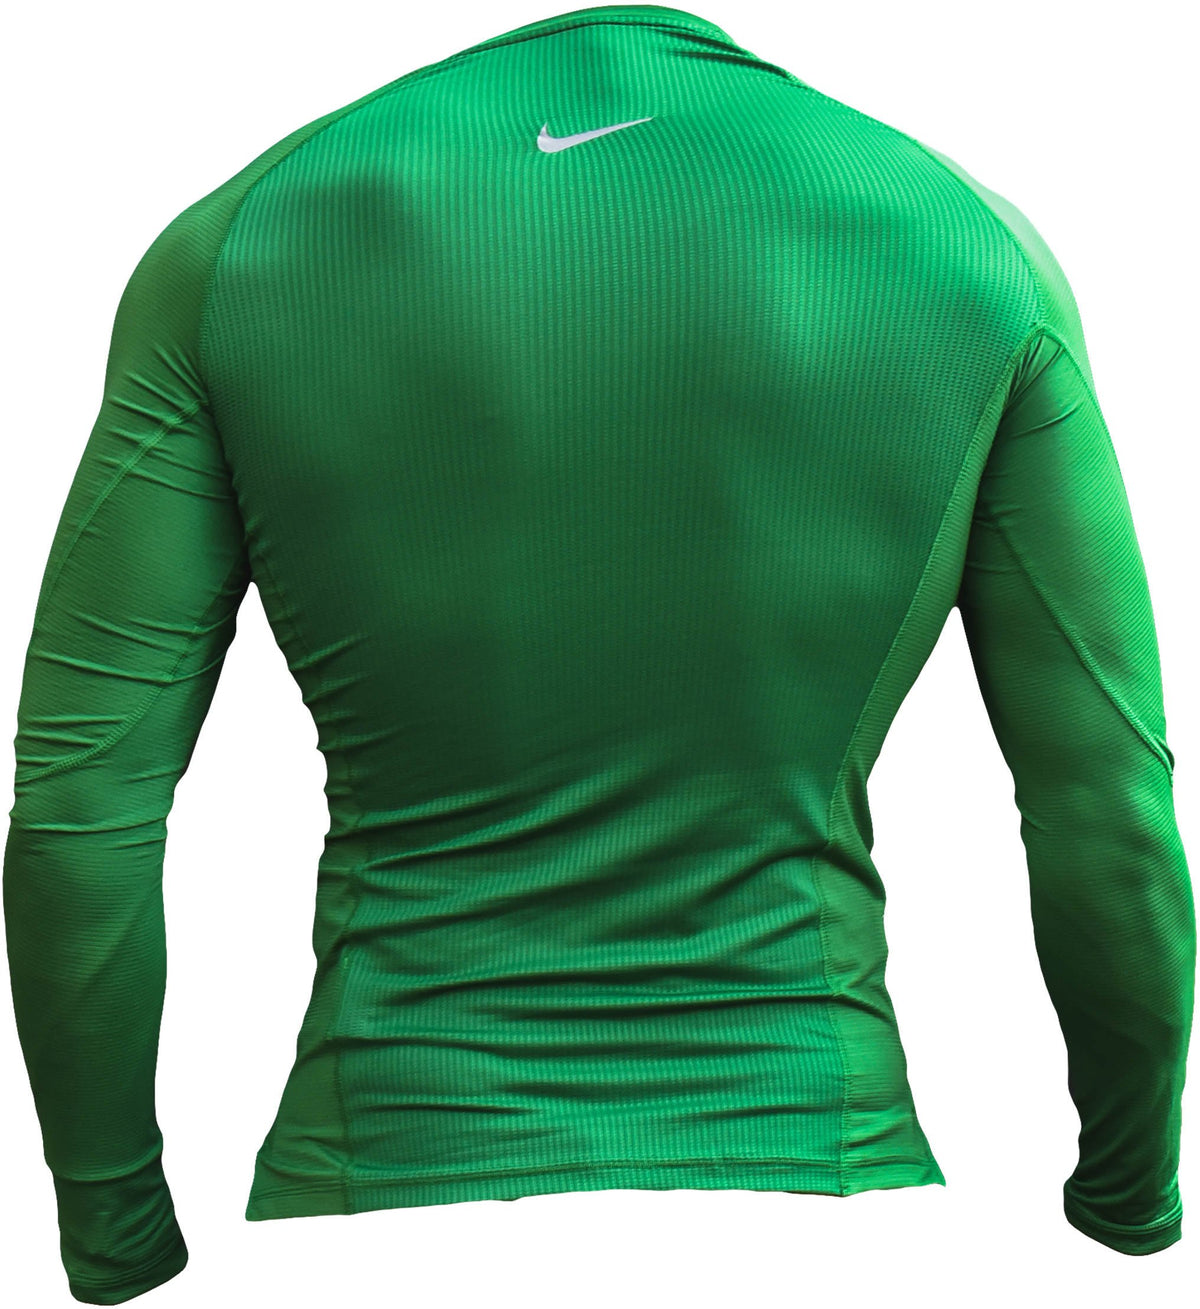 Polera Nike Verde